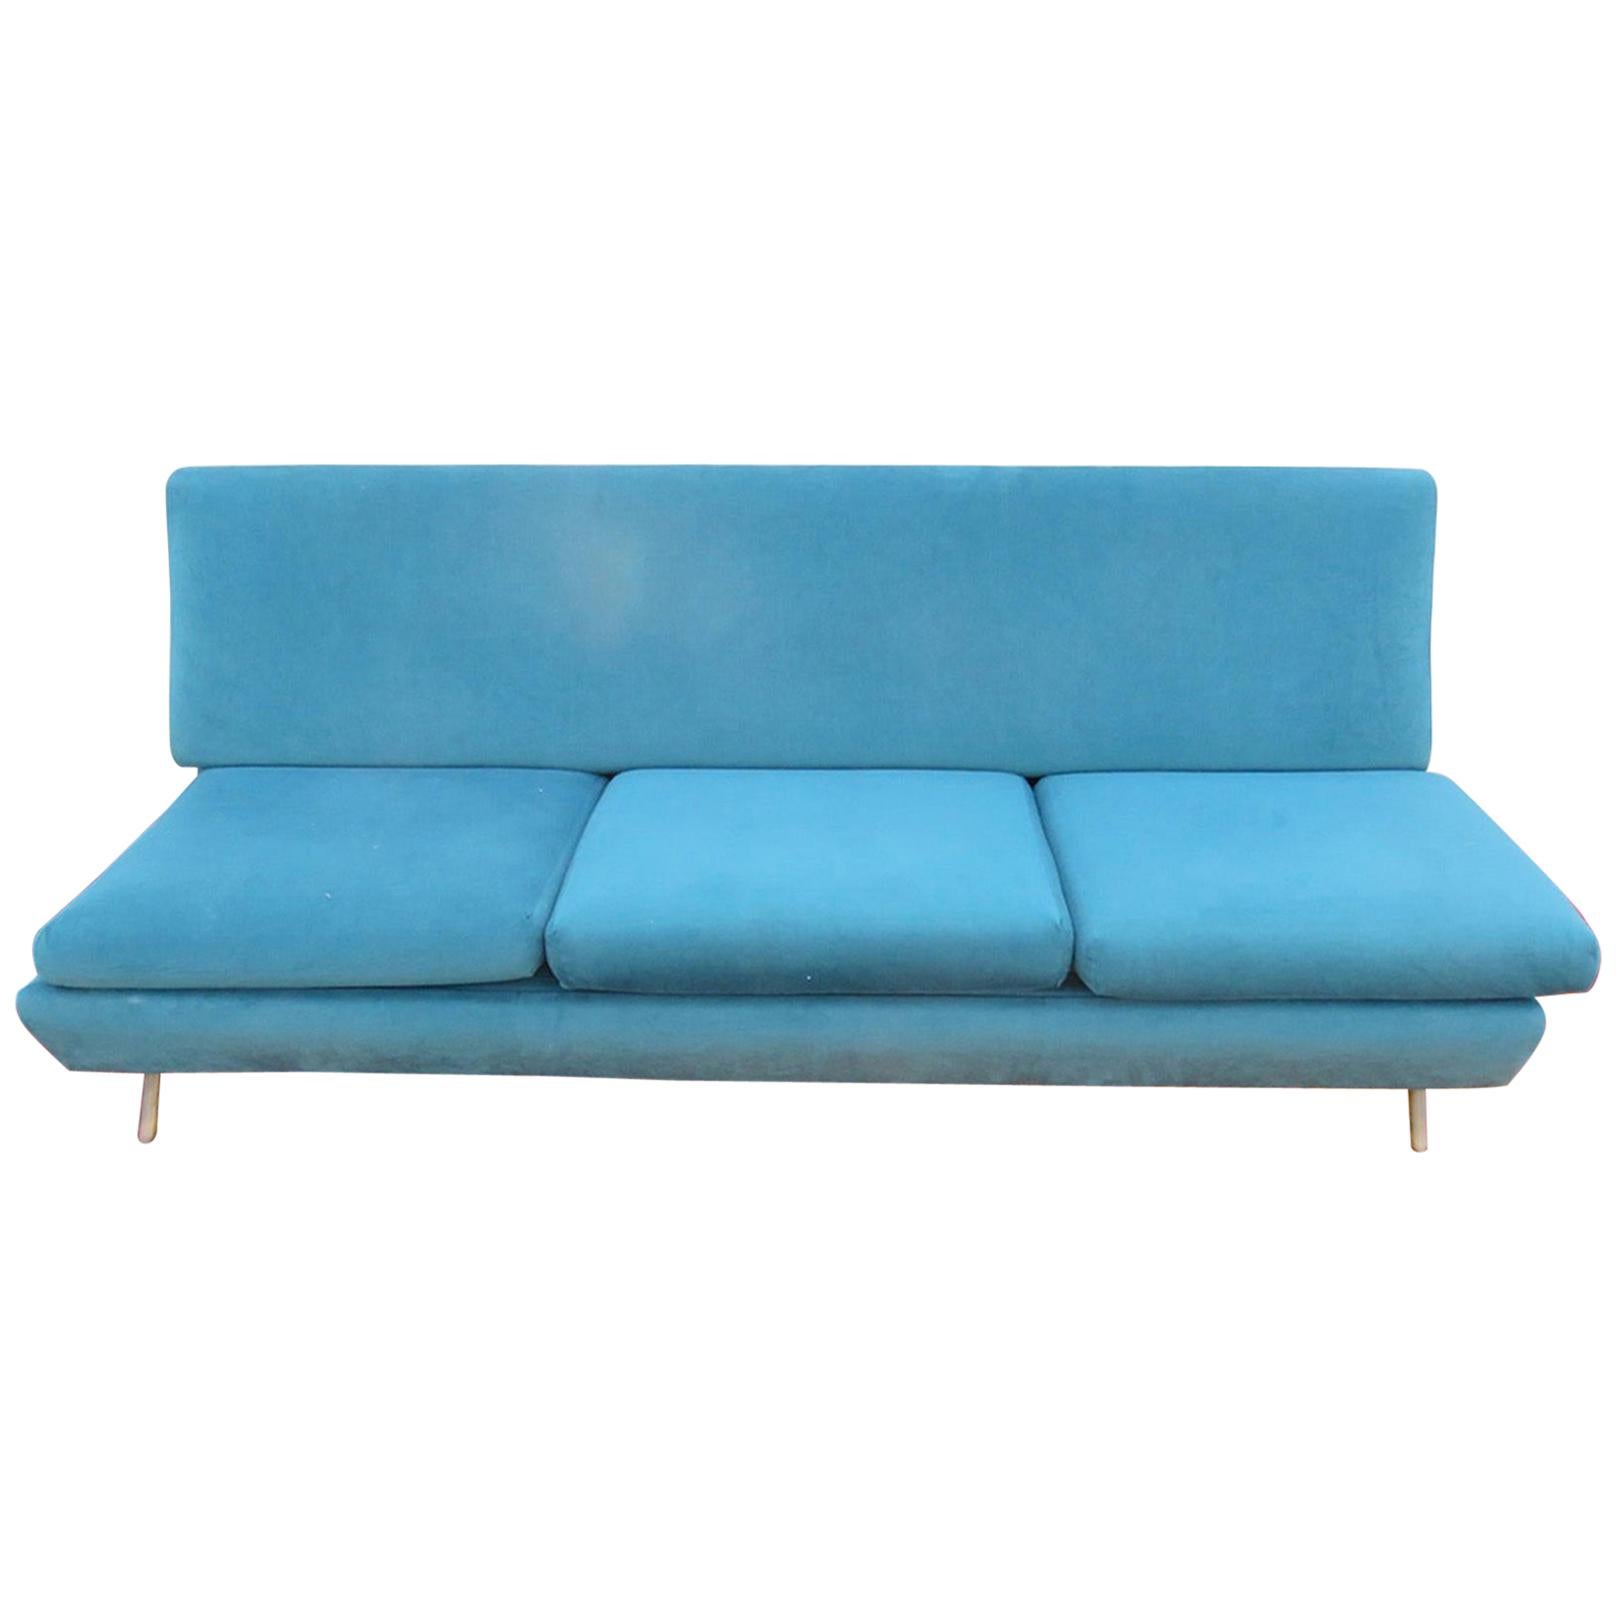 Italian 1950s Era Mid-Century Modern MCM Daybed Sleep Sofa Settee Couch